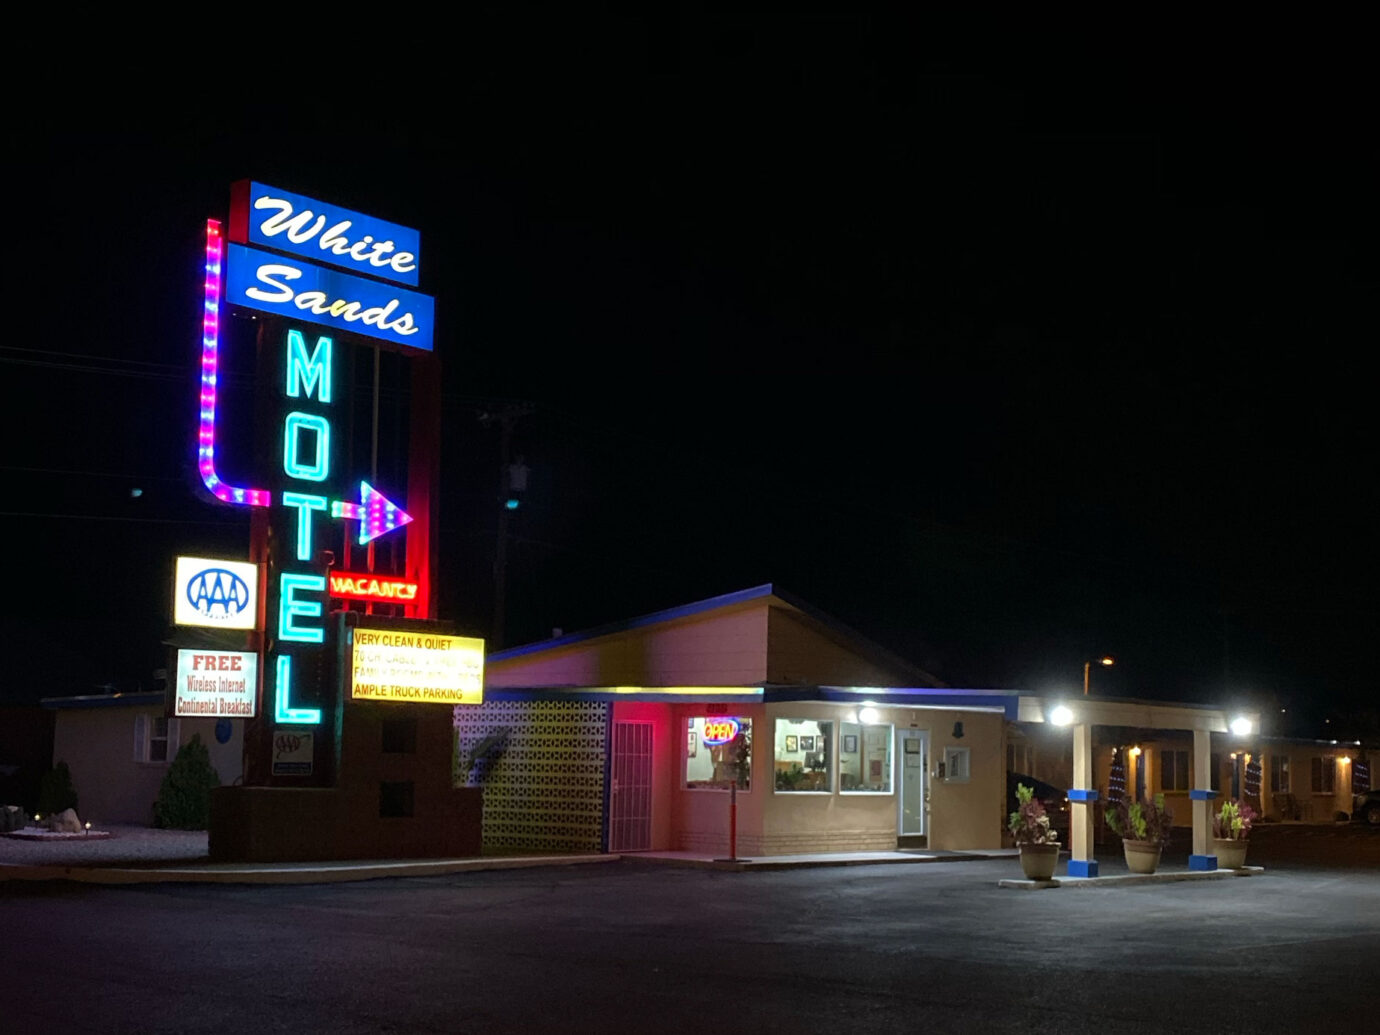 White Sands Motel, New Mexico